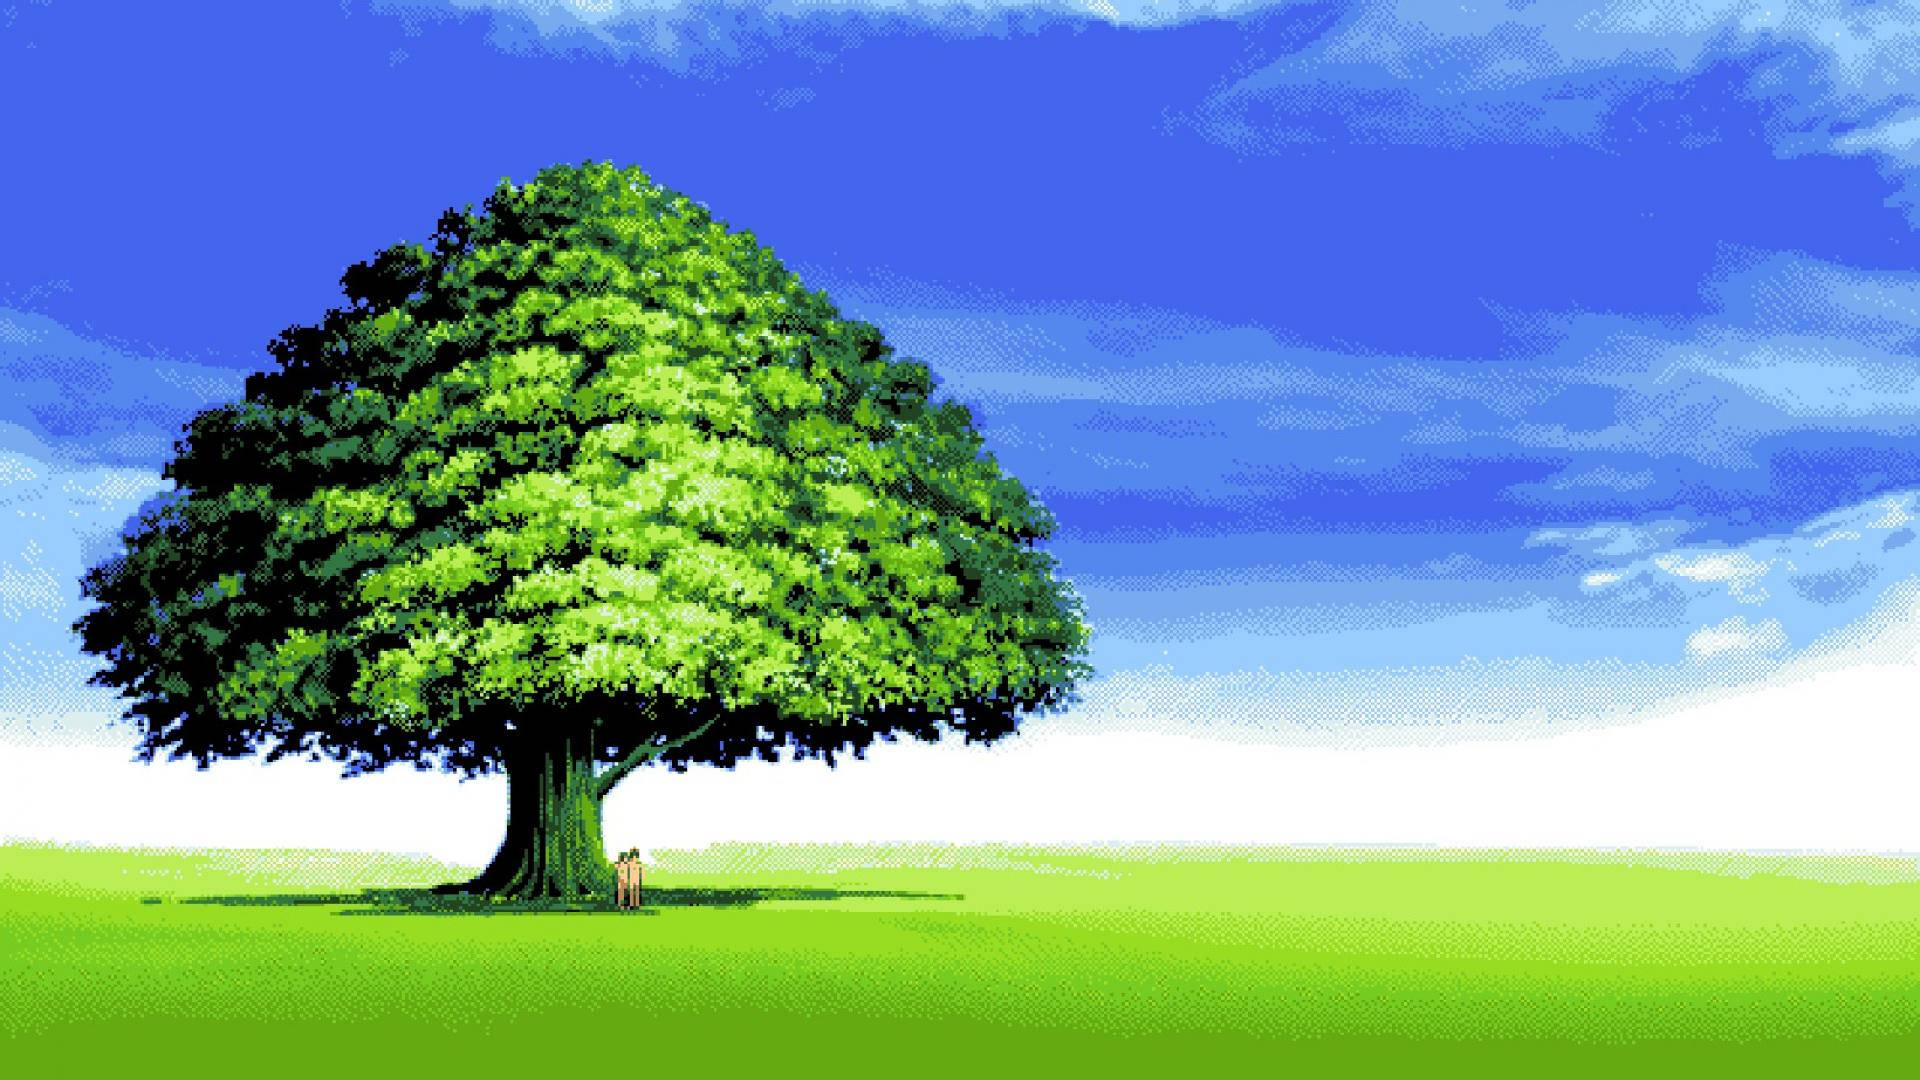 Sky And Tree Landscape Pixel Art